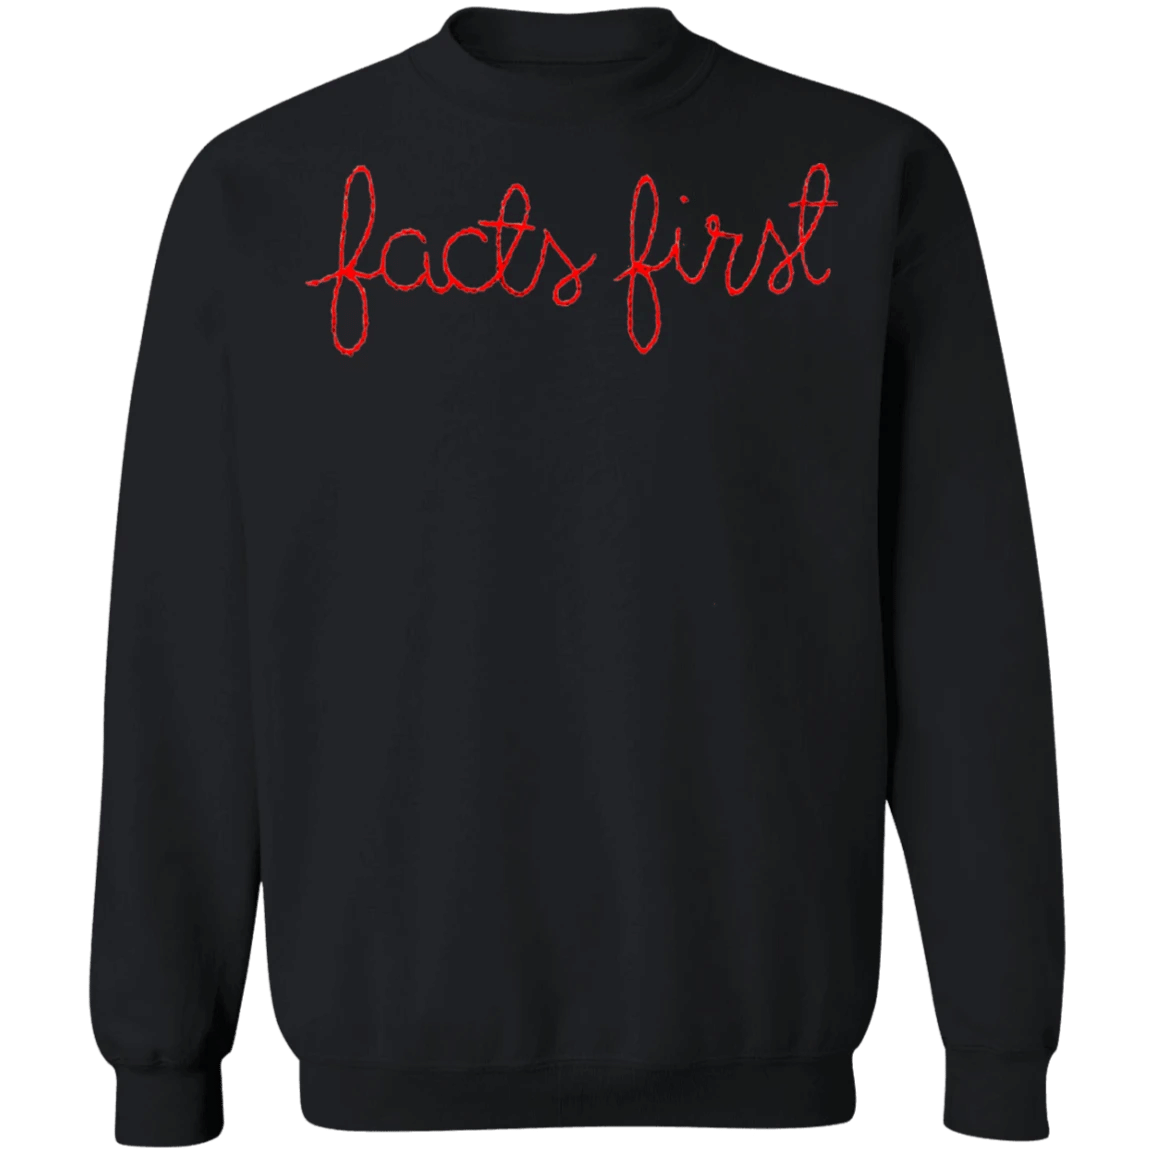 Facts First Sweatshirt For Men Women